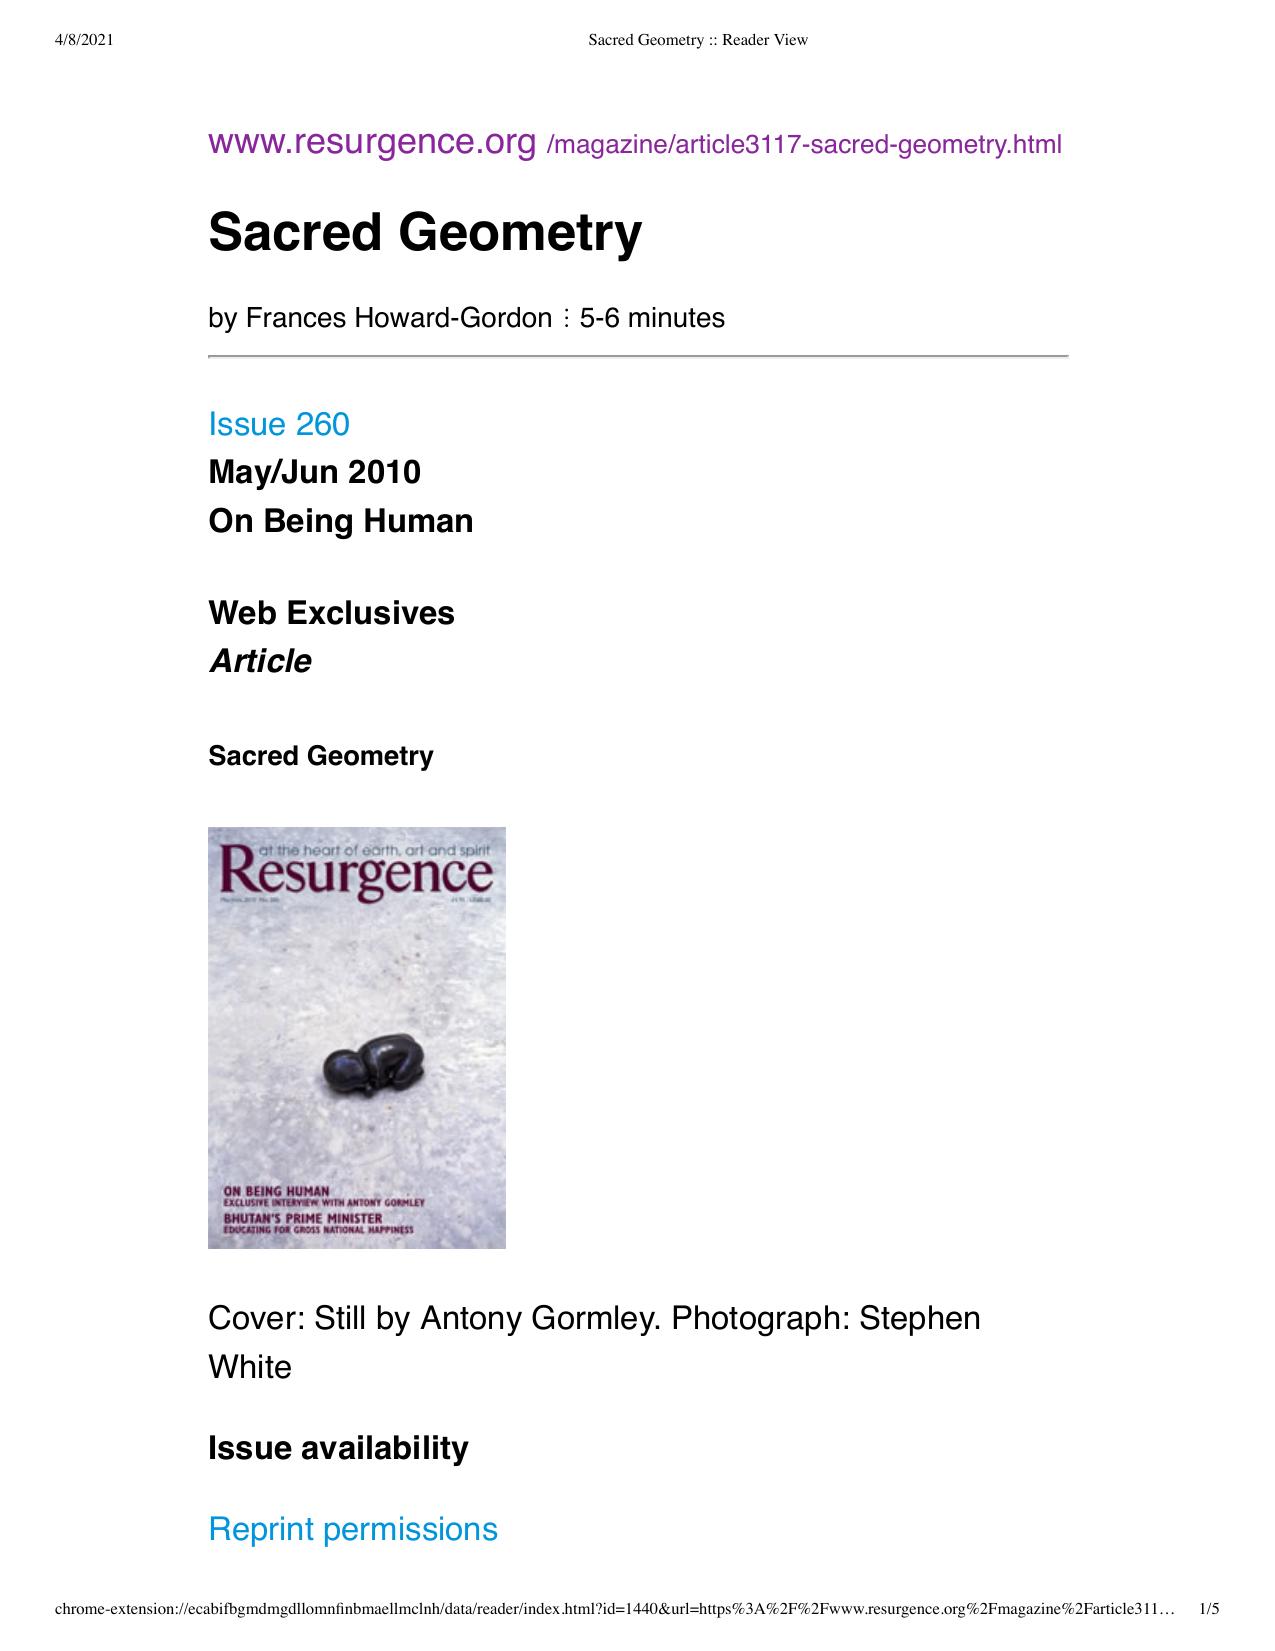 Sacred Geometry, article in Resurgence 2010